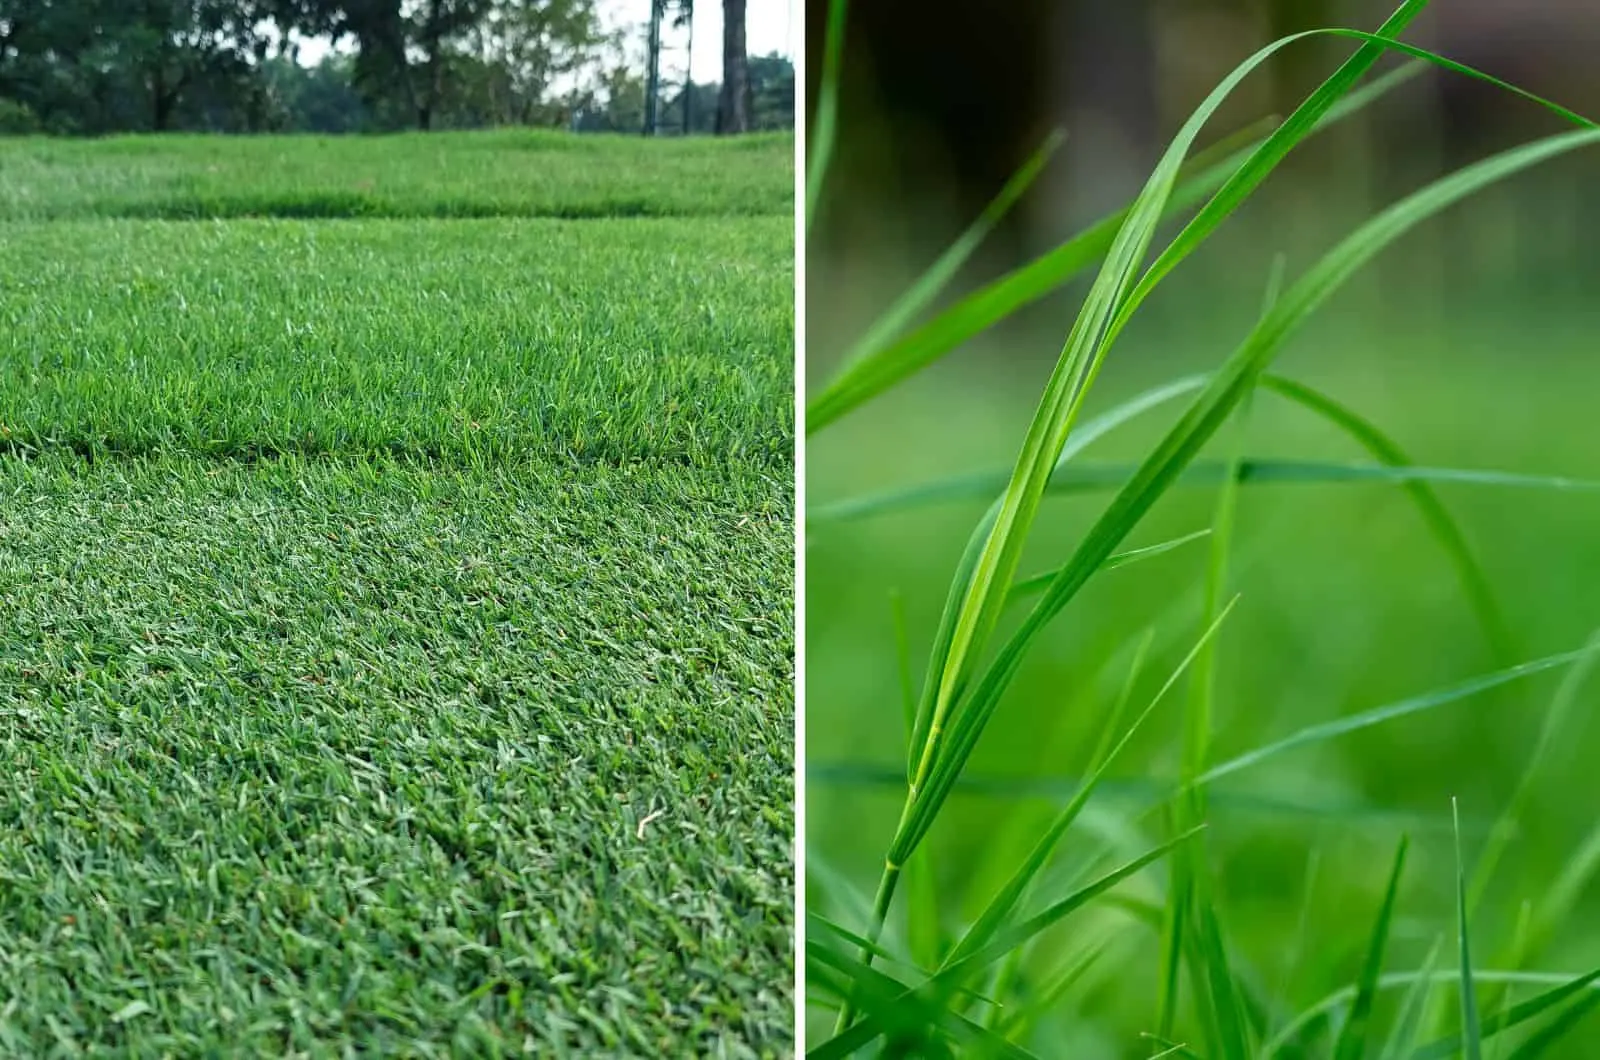 Zoysia and Bermuda grass photos side by side